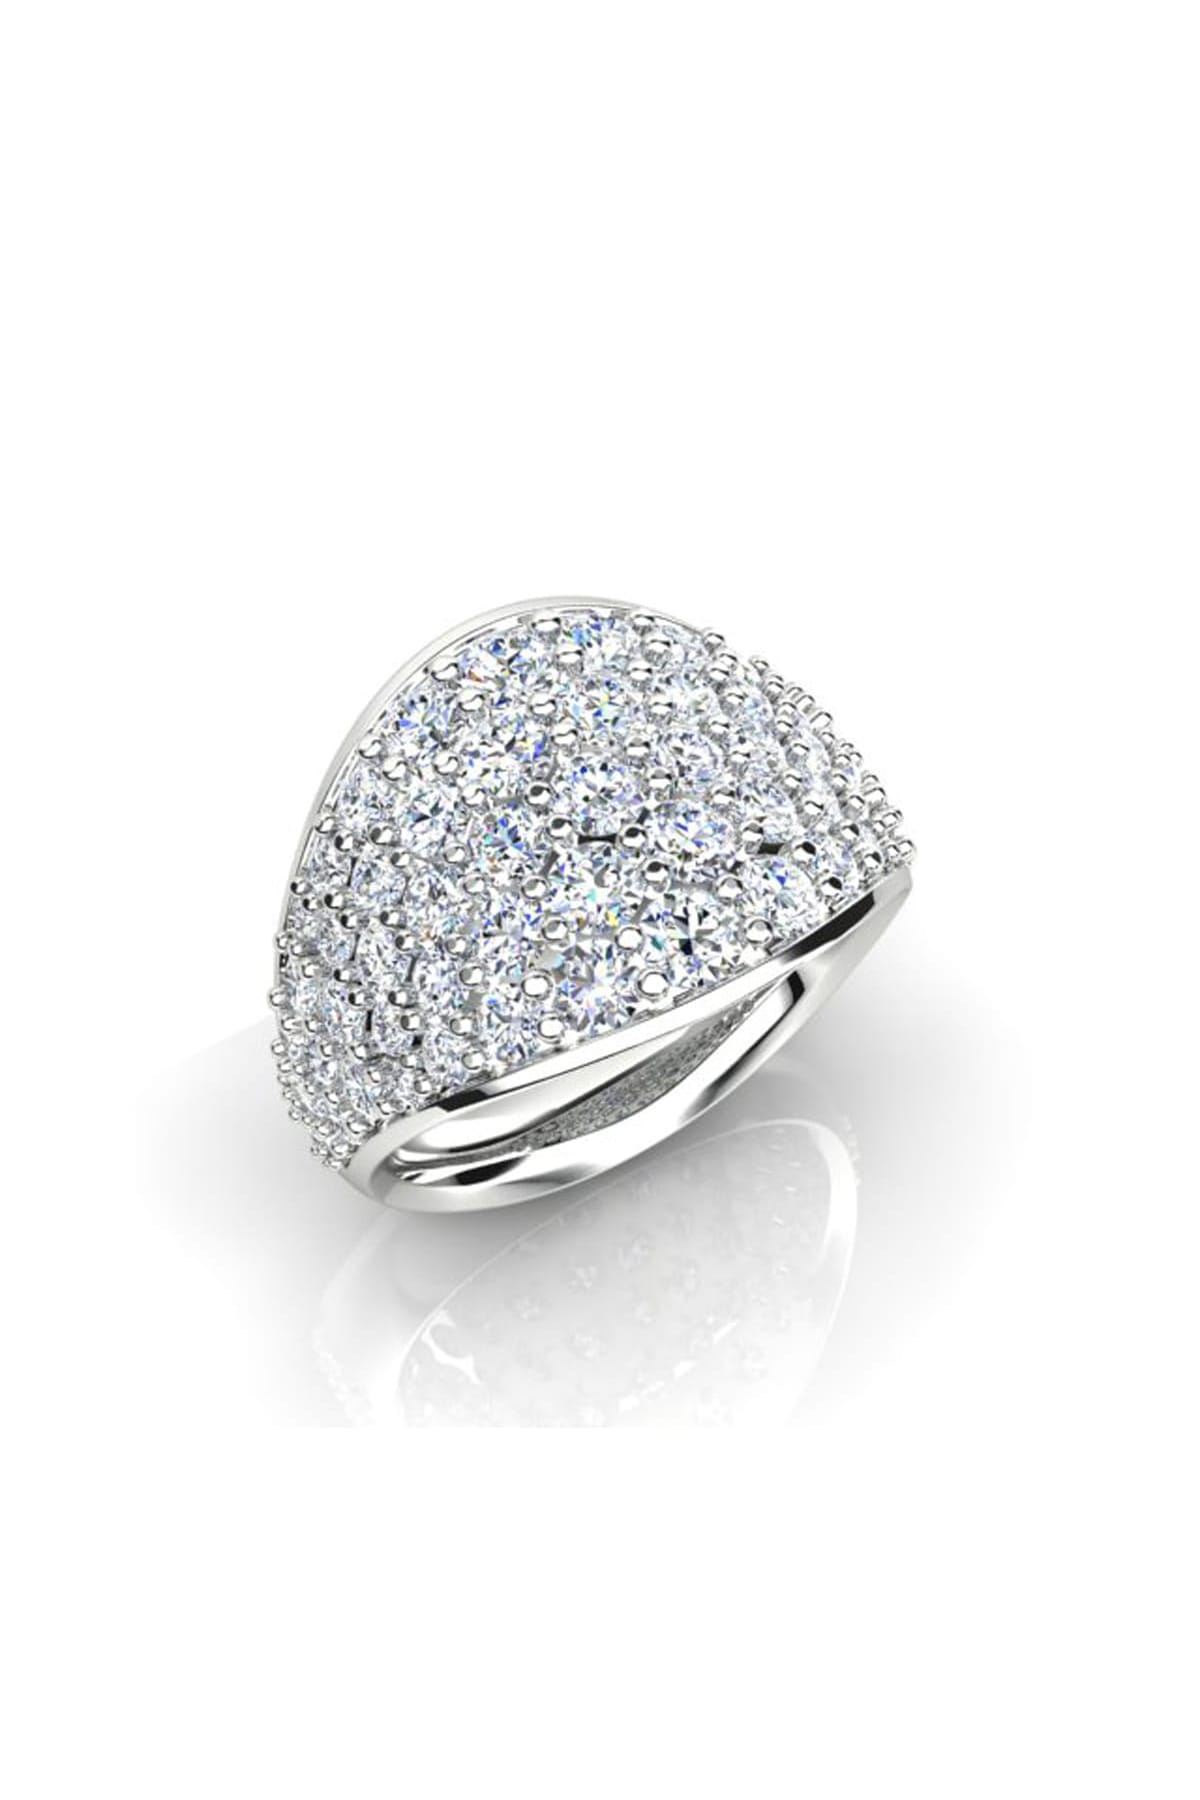 18 Carat White Gold Pave Set Diamond Ring available at LeGassick Diamonds and Jewellery Gold Coast, Australia.